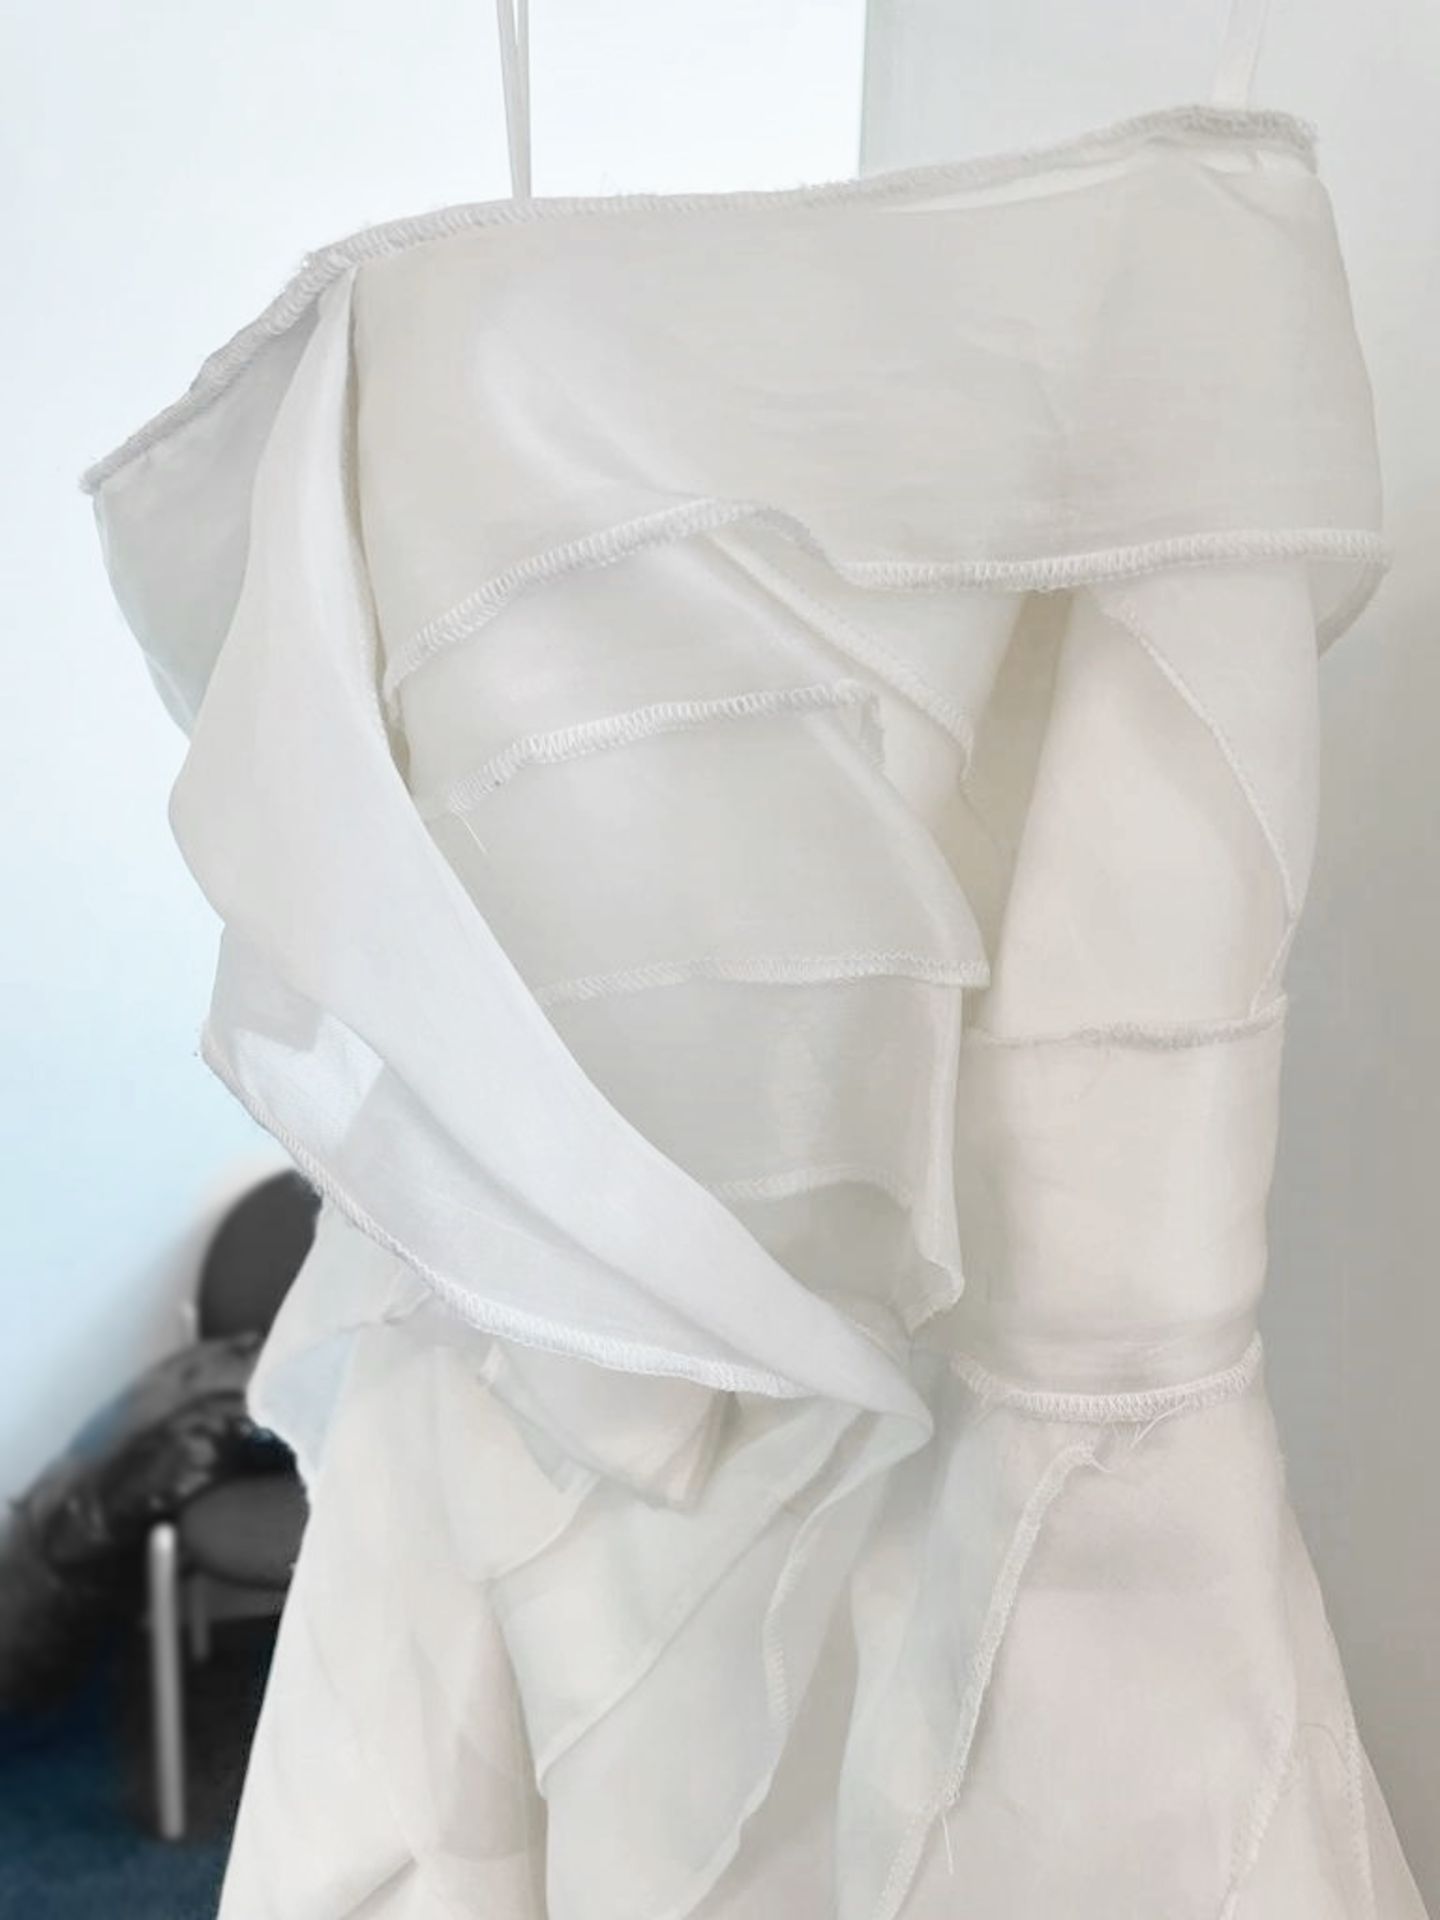 1 x DAVID FIELDEN Strapless Short 100% Silk Waterfall Designer Wedding Dress Bridal Gown - Image 2 of 6